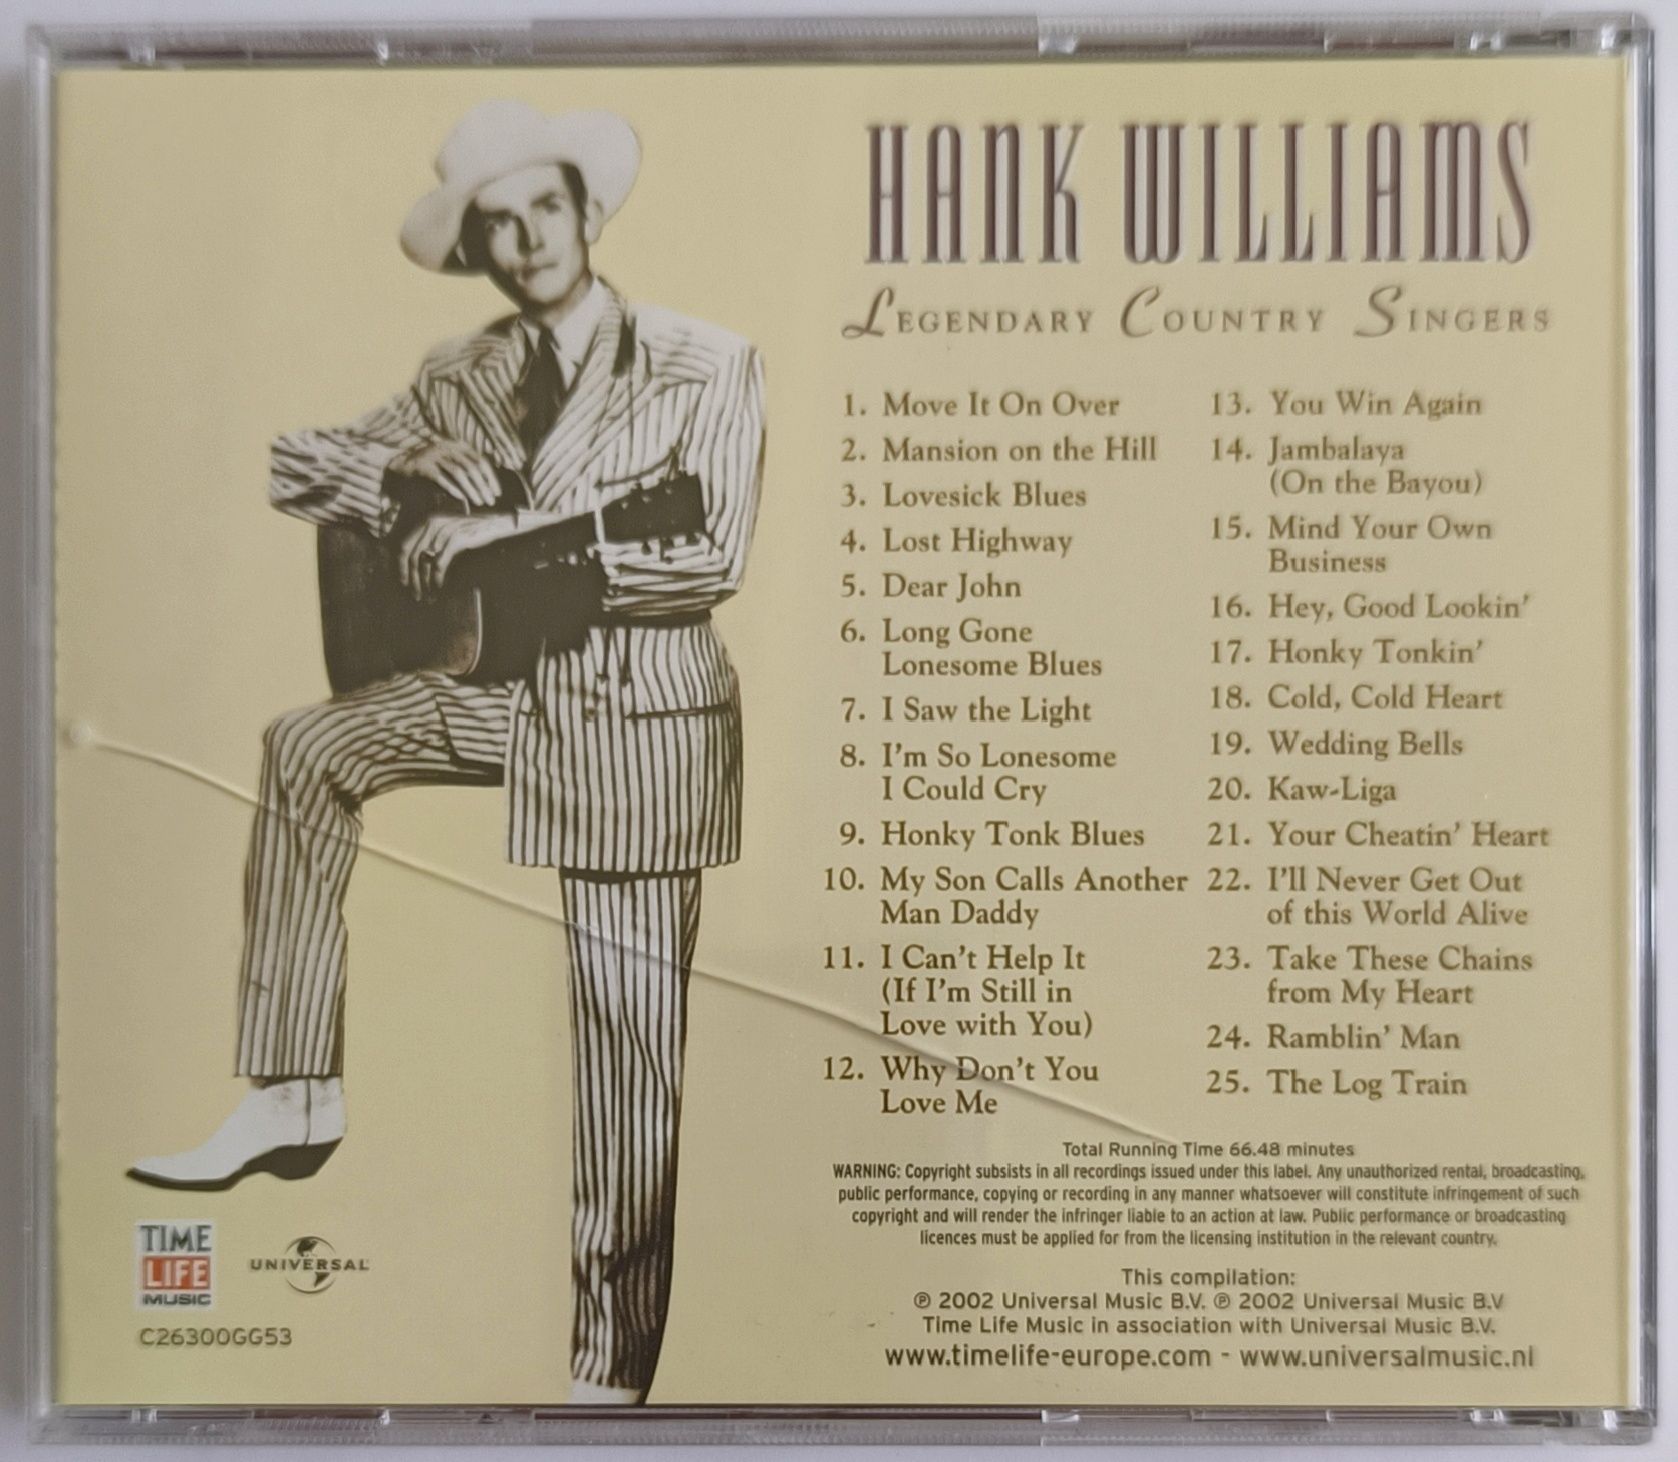 Hank Williams Legendary Country Singers 2002r